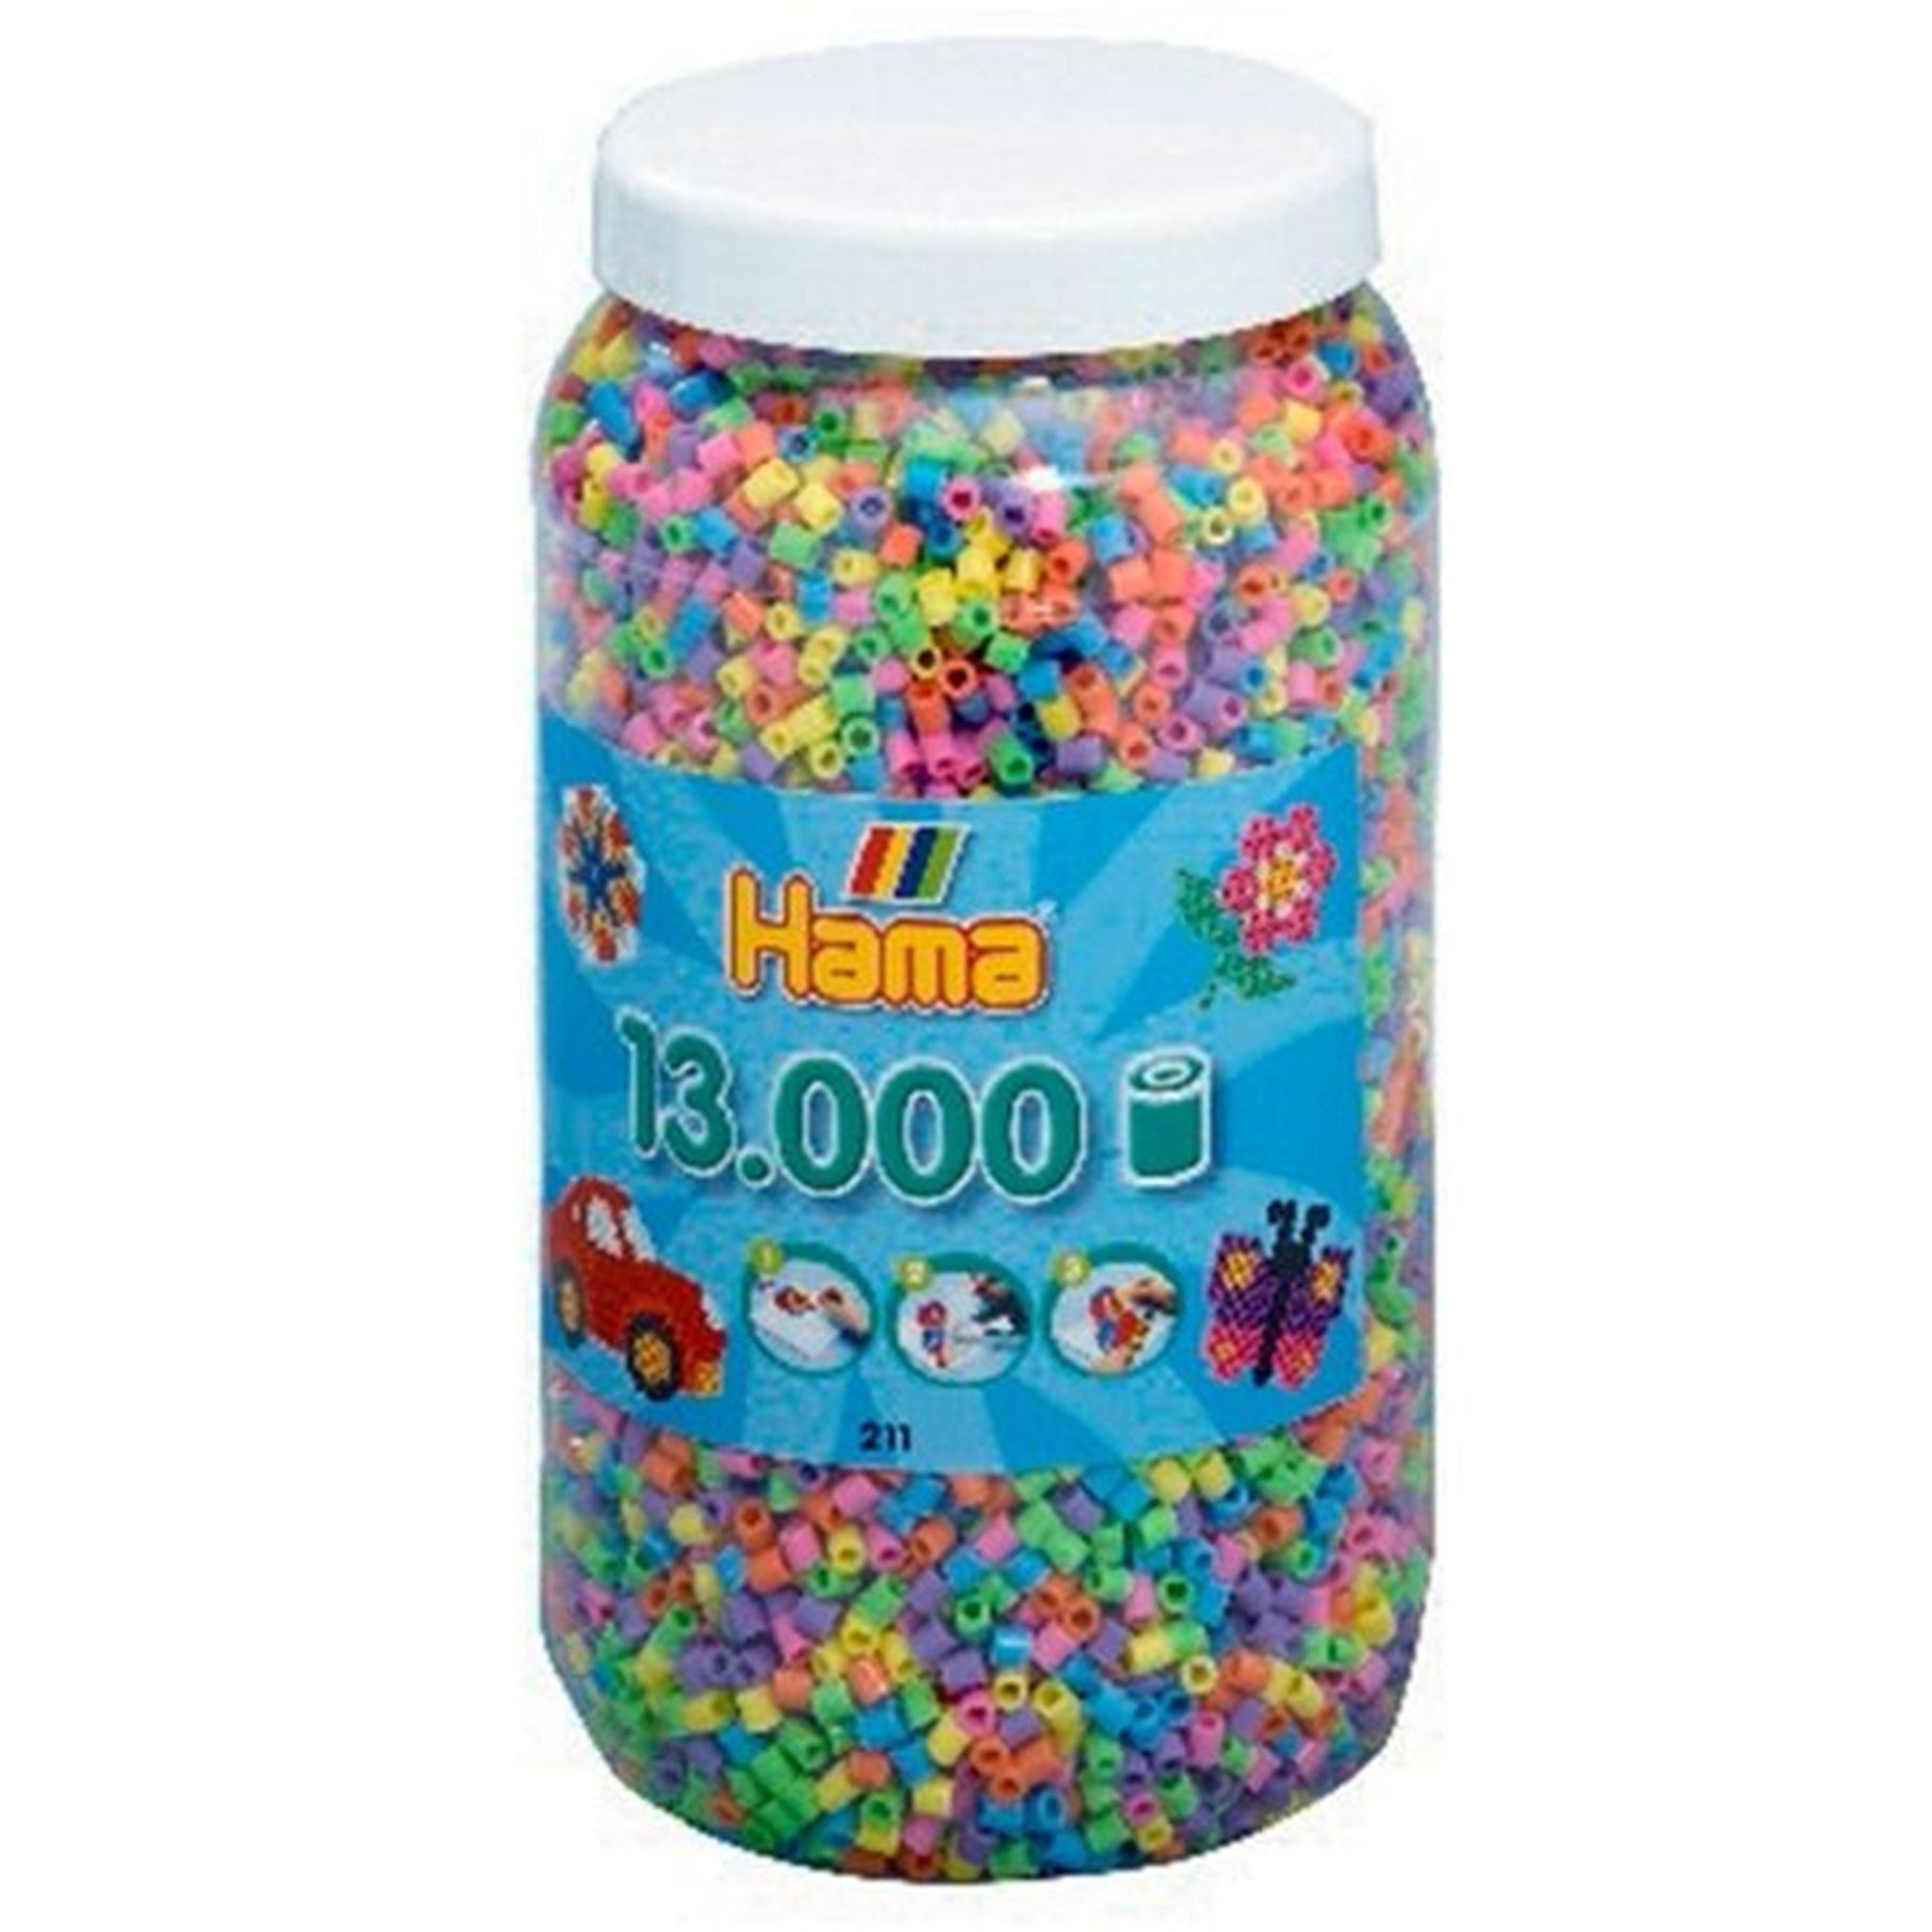 HAMA Midi Pearls 13.000 pcs Pastel Mix